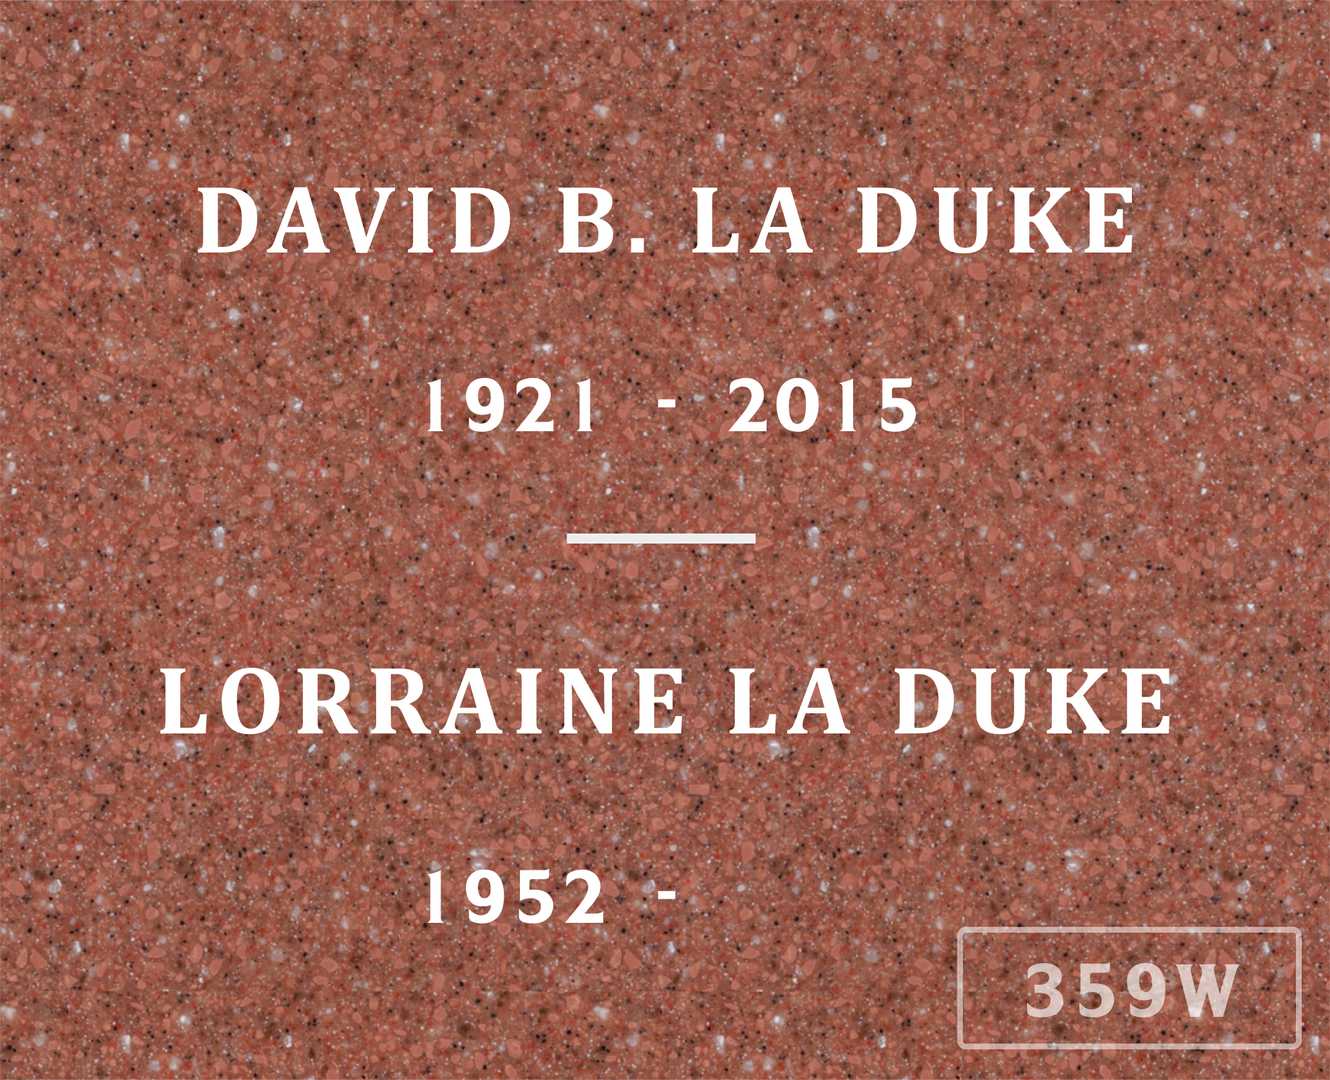 David B. La Duke's grave